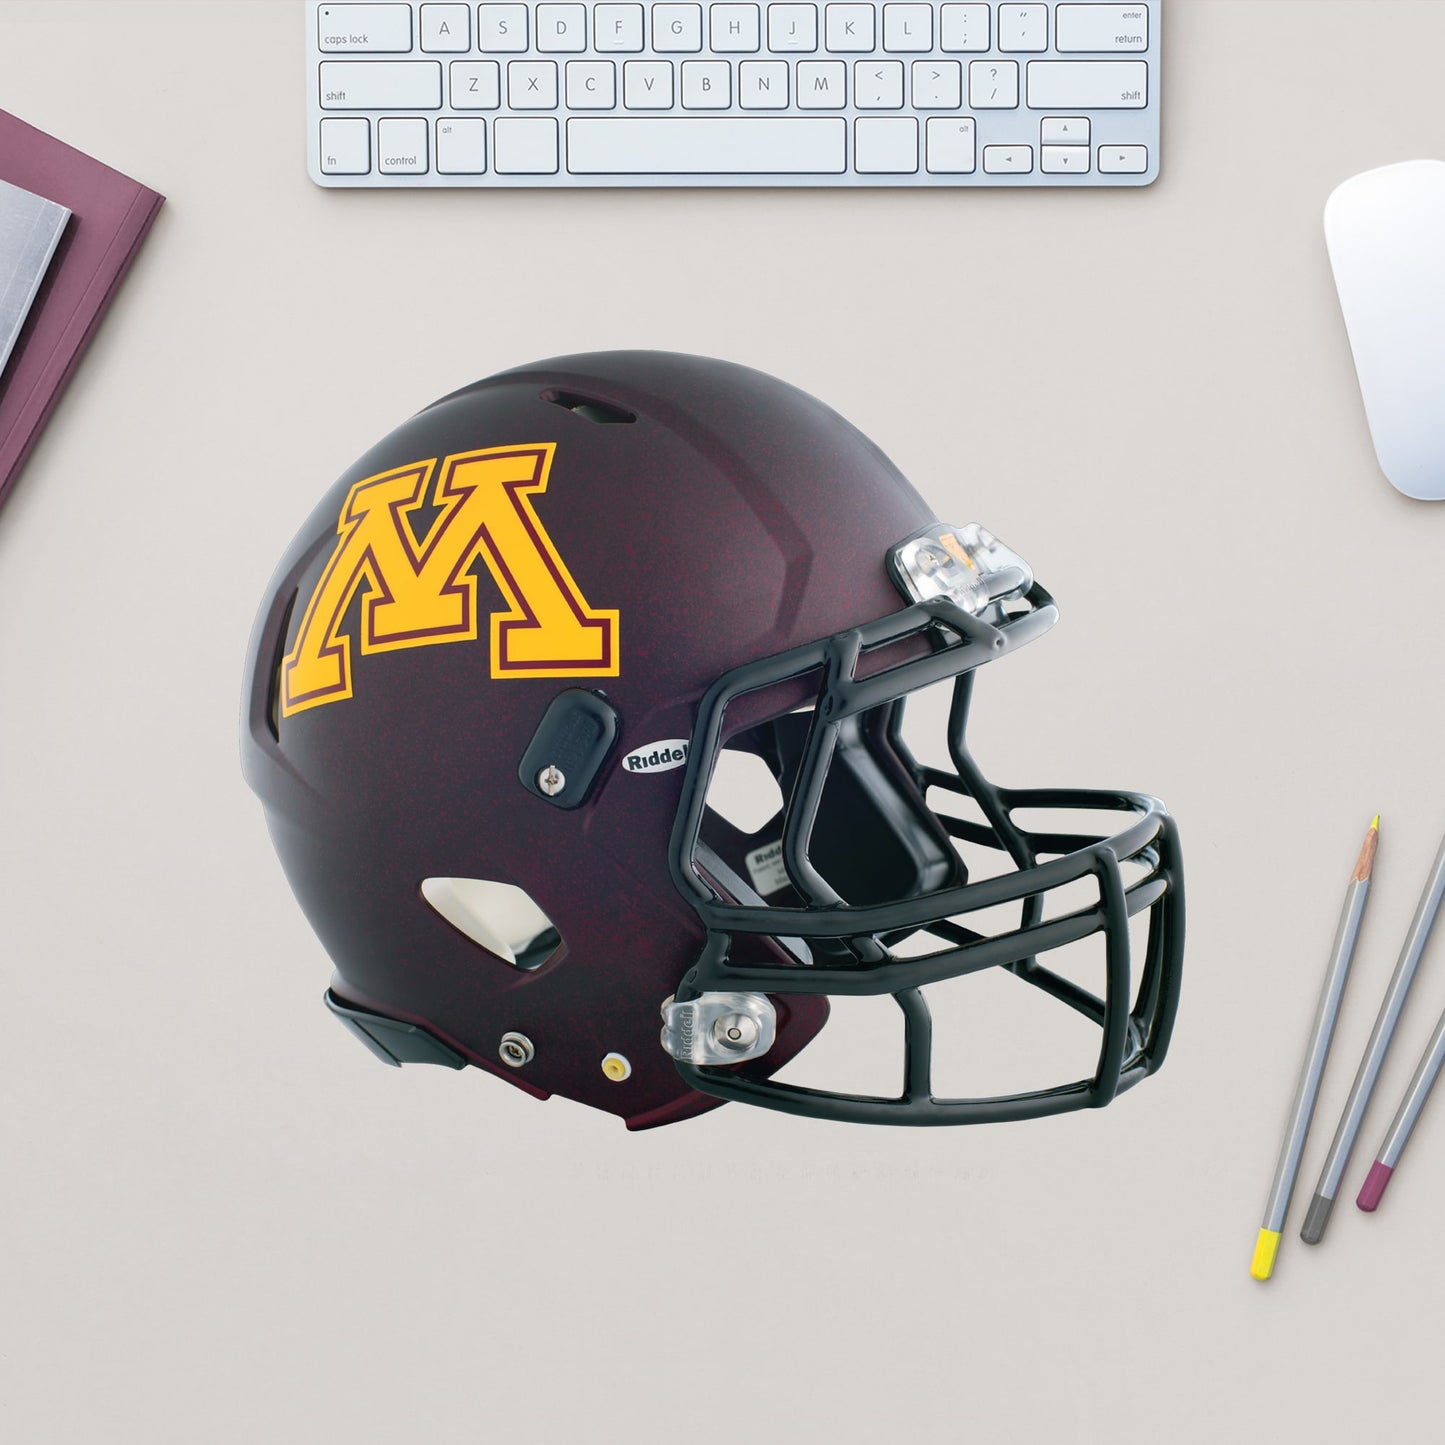 U of Minnesota: Minnesota Golden Gophers Helmet     Helmet  - Officially Licensed NCAA Removable     Adhesive Decal